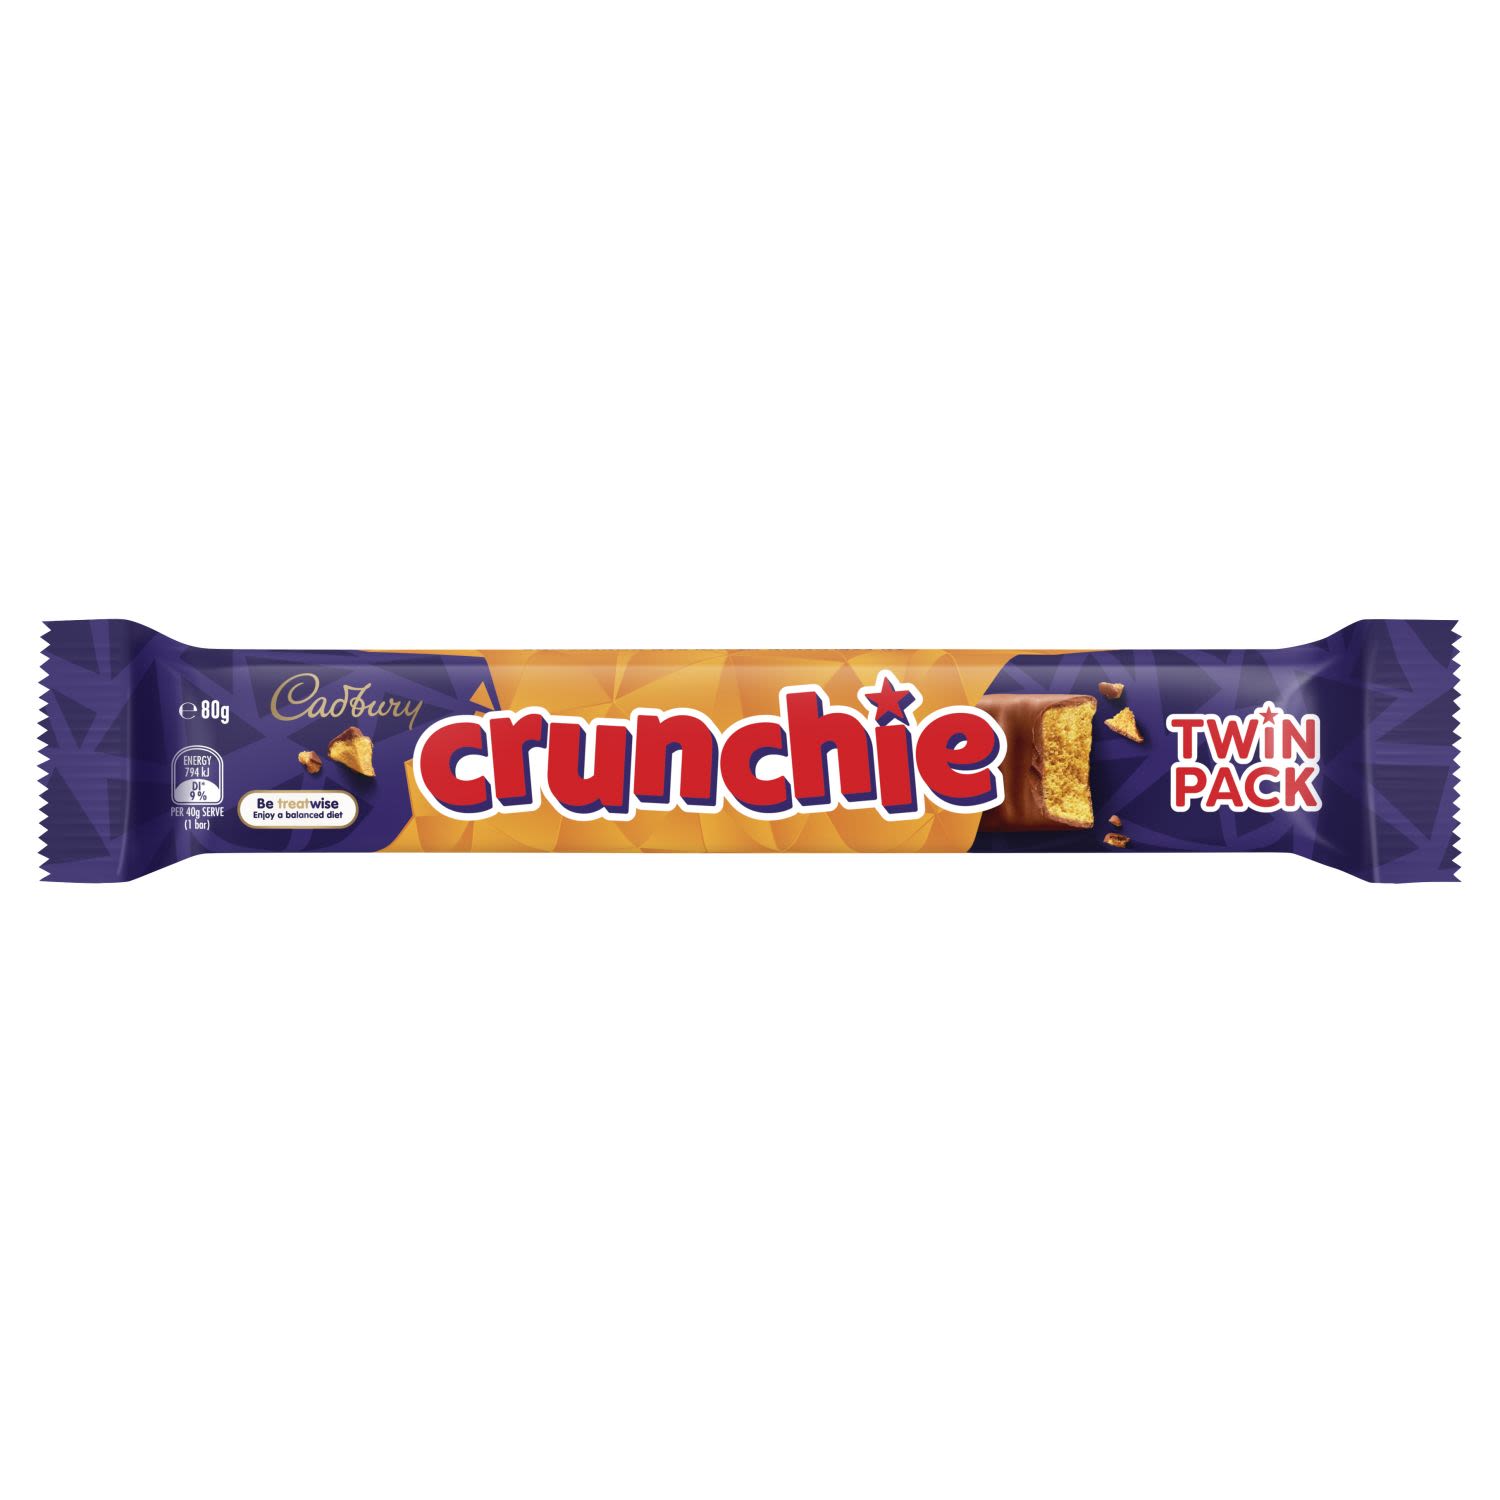 Cadbury Crunchie Chocolate Bar King Size, 80 Gram